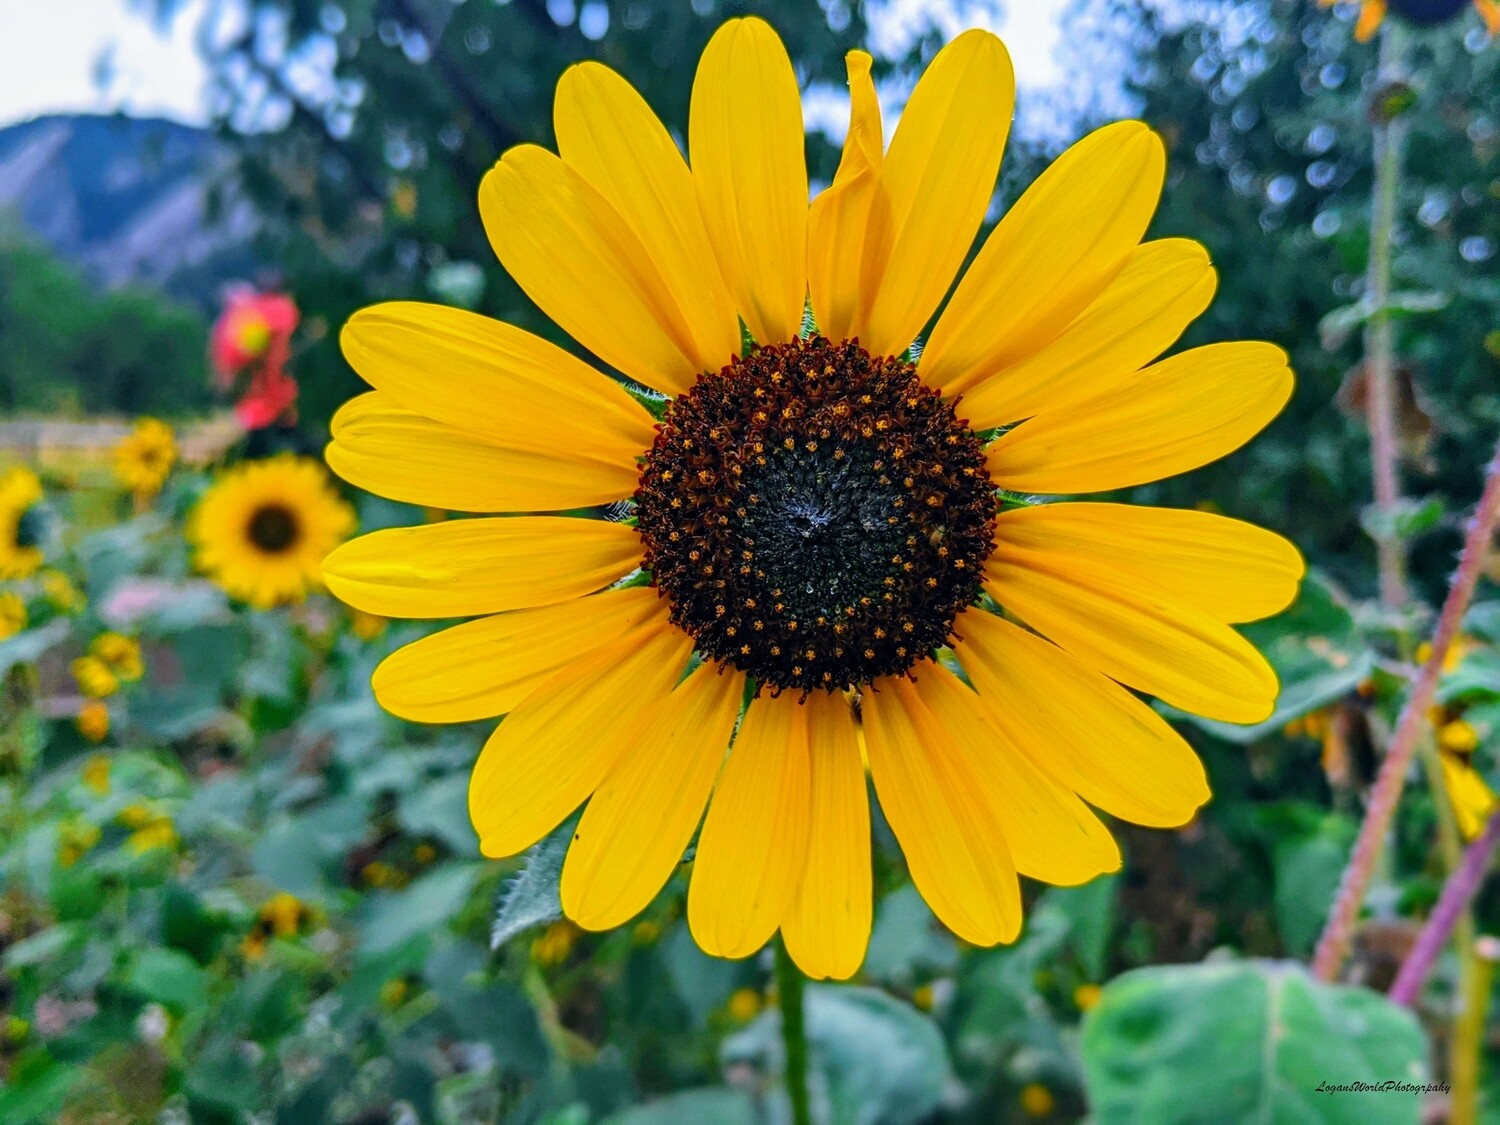 Sunflower 15" x 20" Photo Print